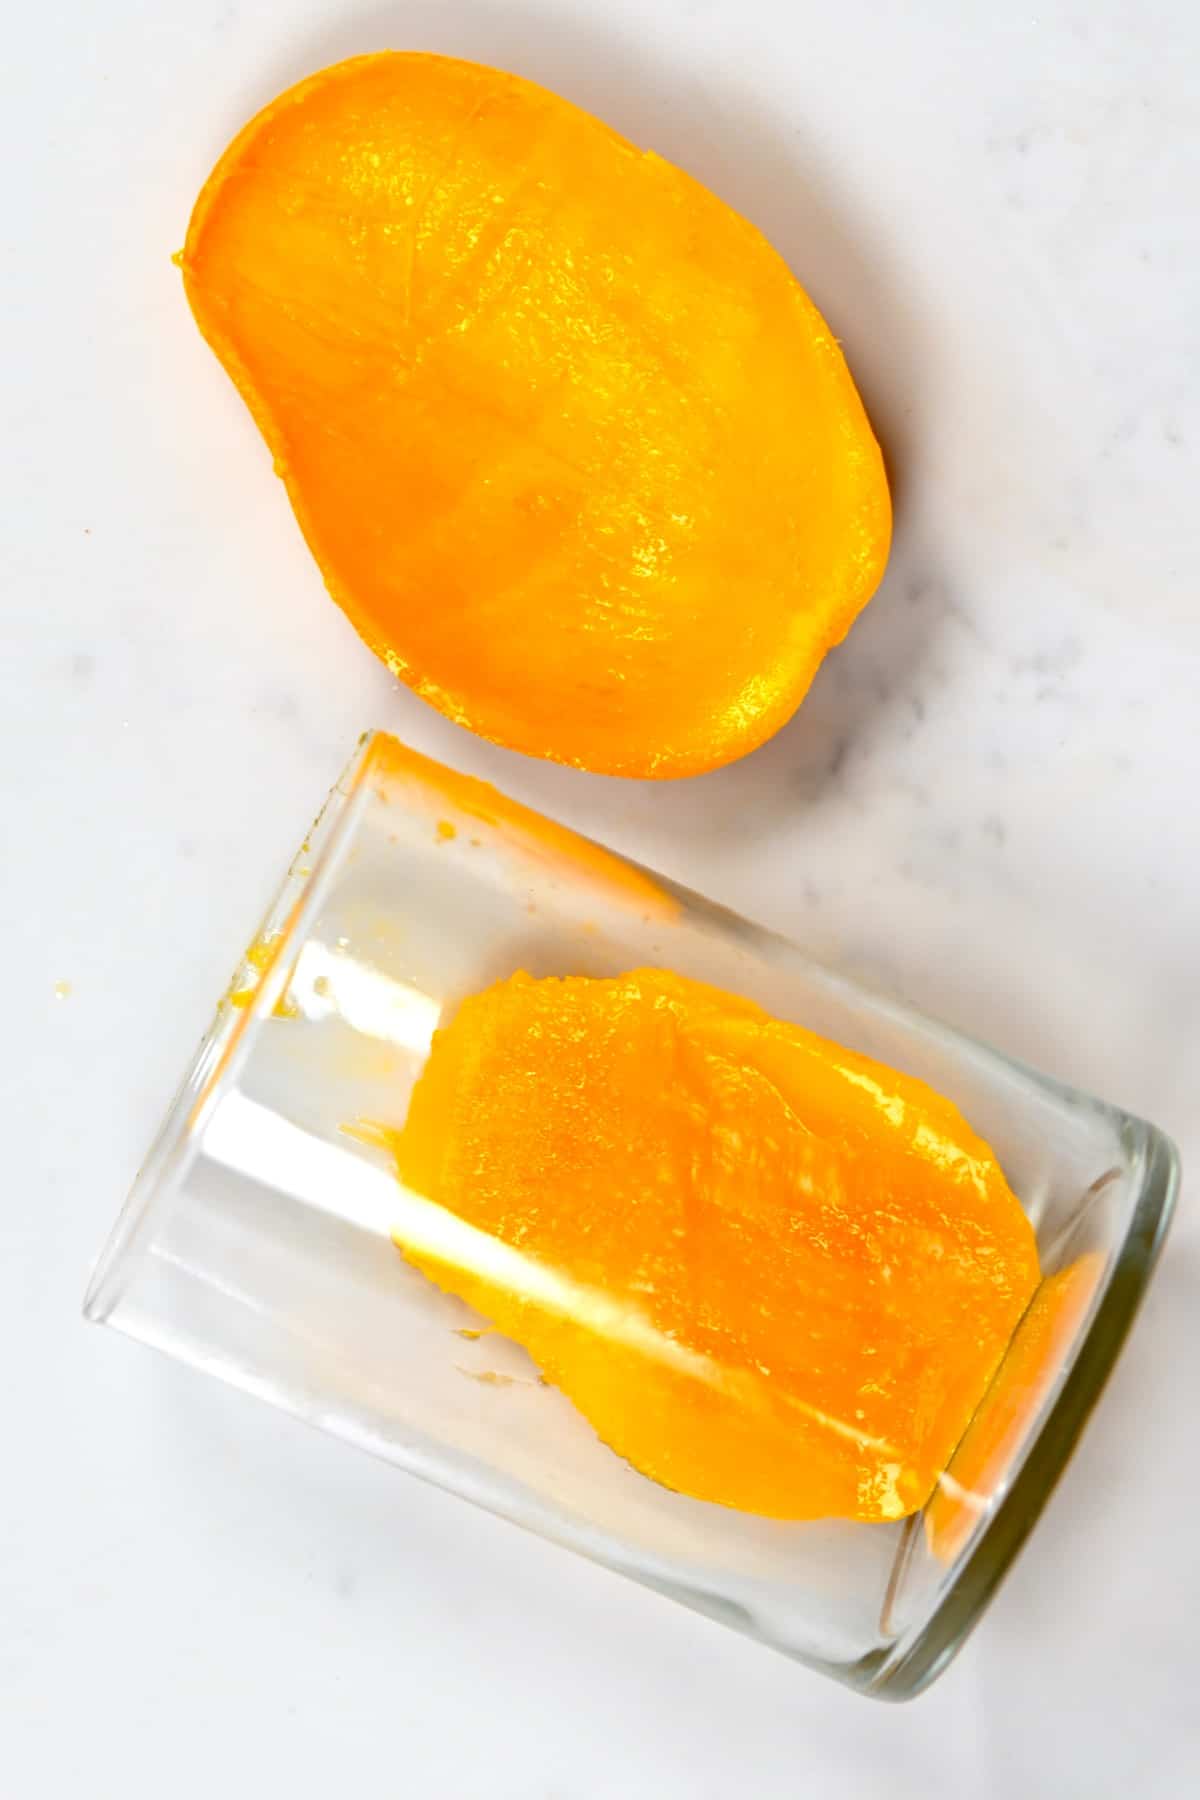 mango peel and ripe mango in a cup